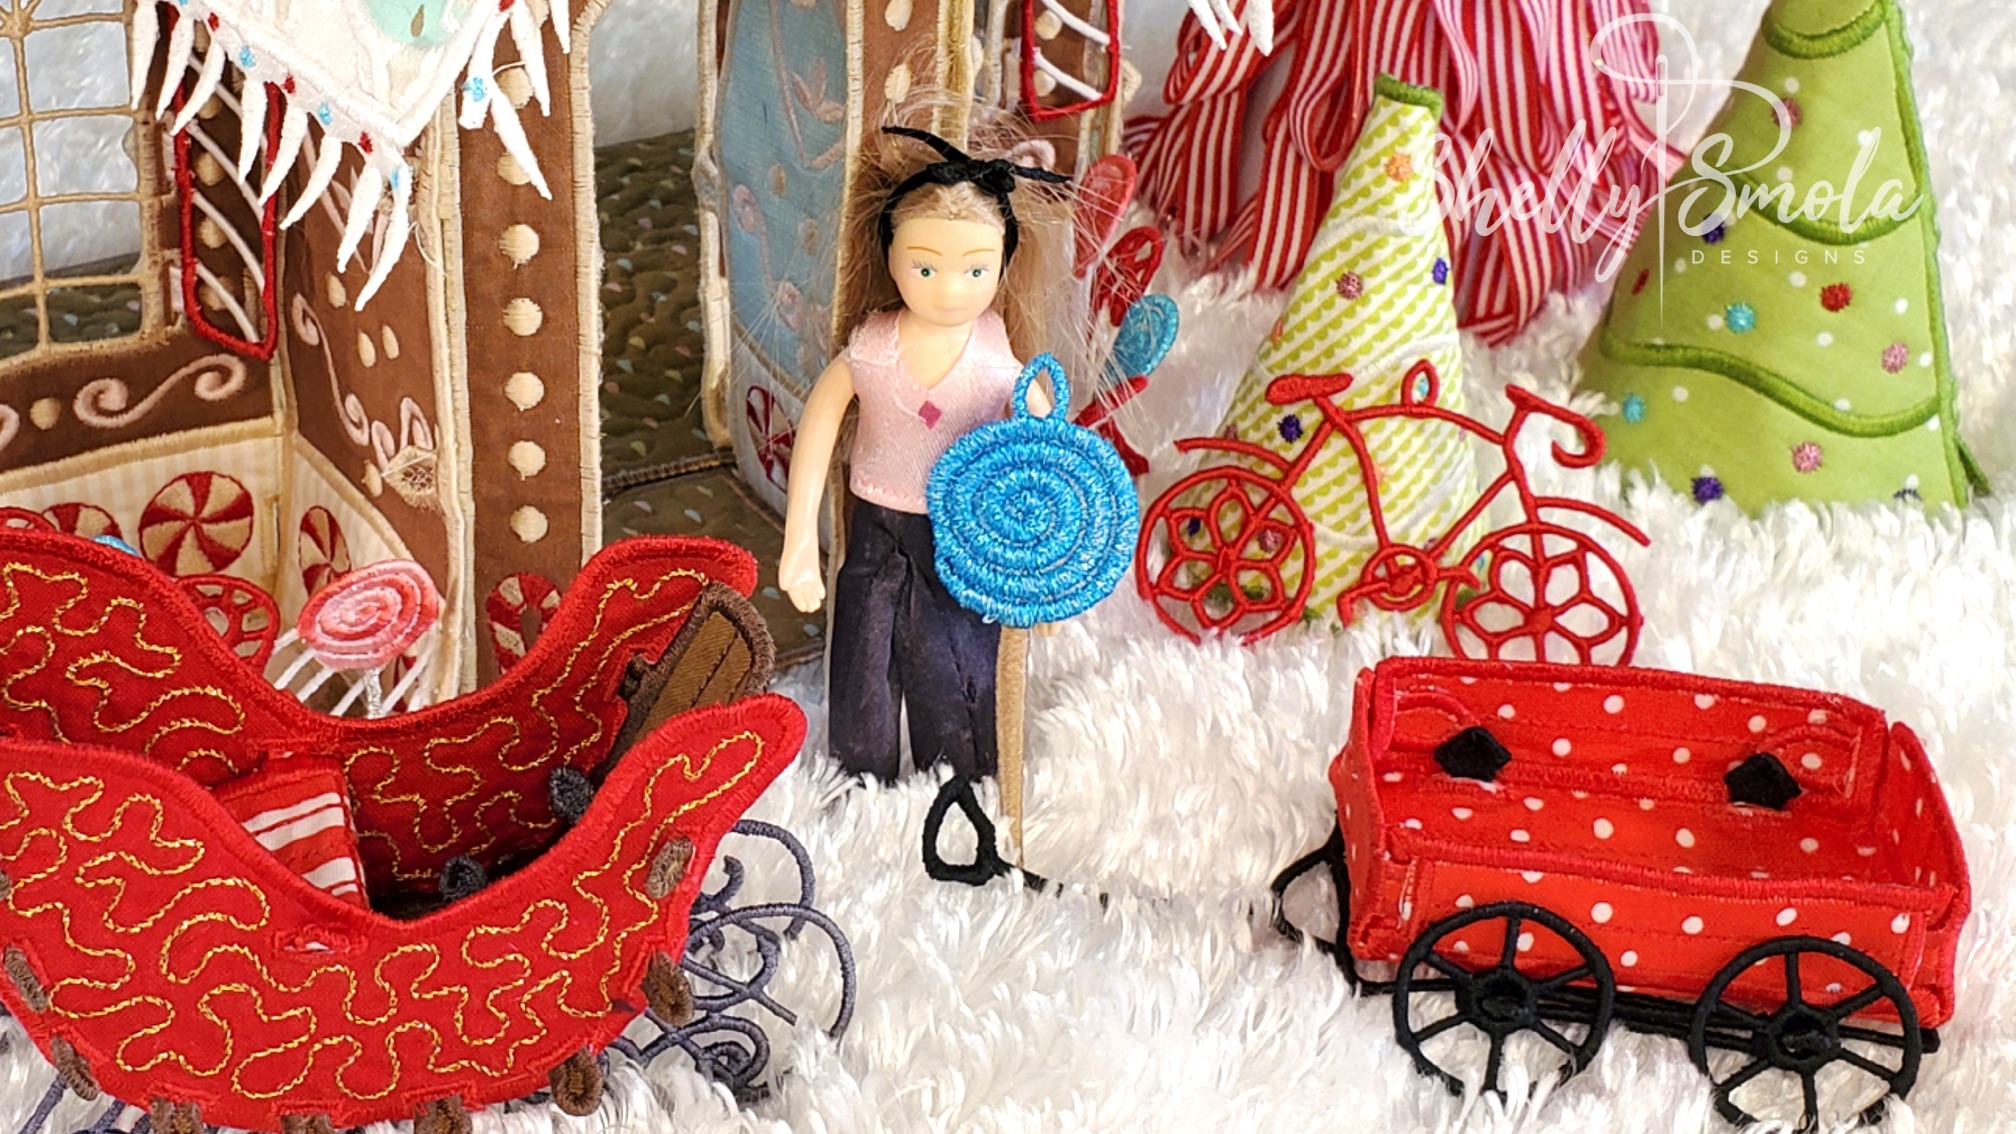 Merry Mini Ornaments by Shelly Smola